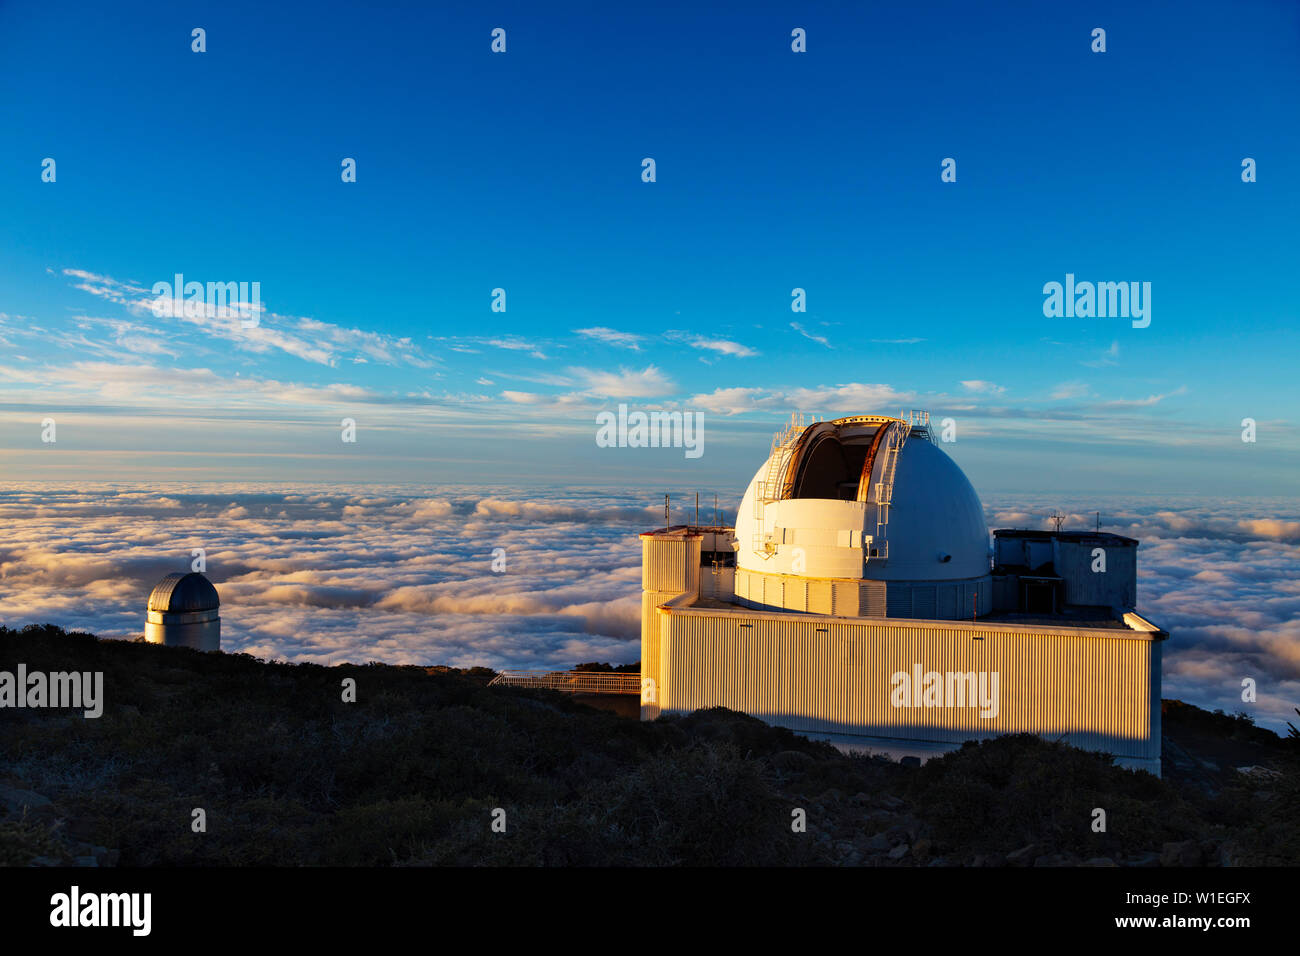 Teleskop Observatorium, die Caldera de Taburiente Nationalpark, UNESCO Biosphäre Website, La Palma, Kanarische Inseln, Spanien, Atlantik, Europa Stockfoto